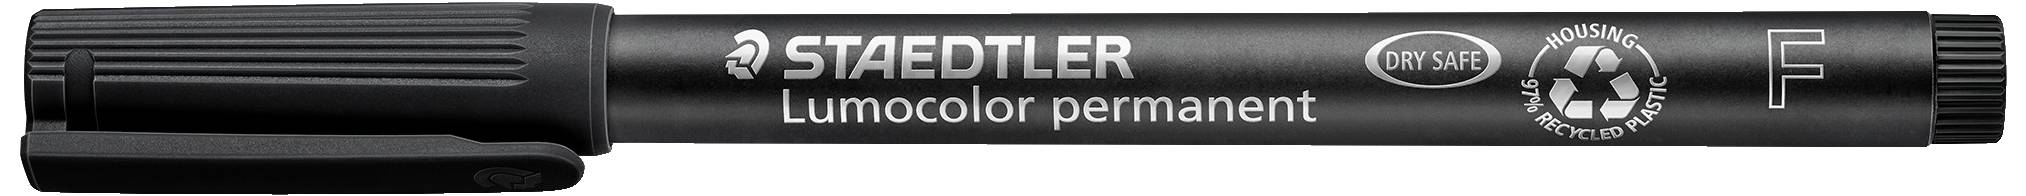 STAEDTLER Projektionsschreiber Lumocolor 318 perm